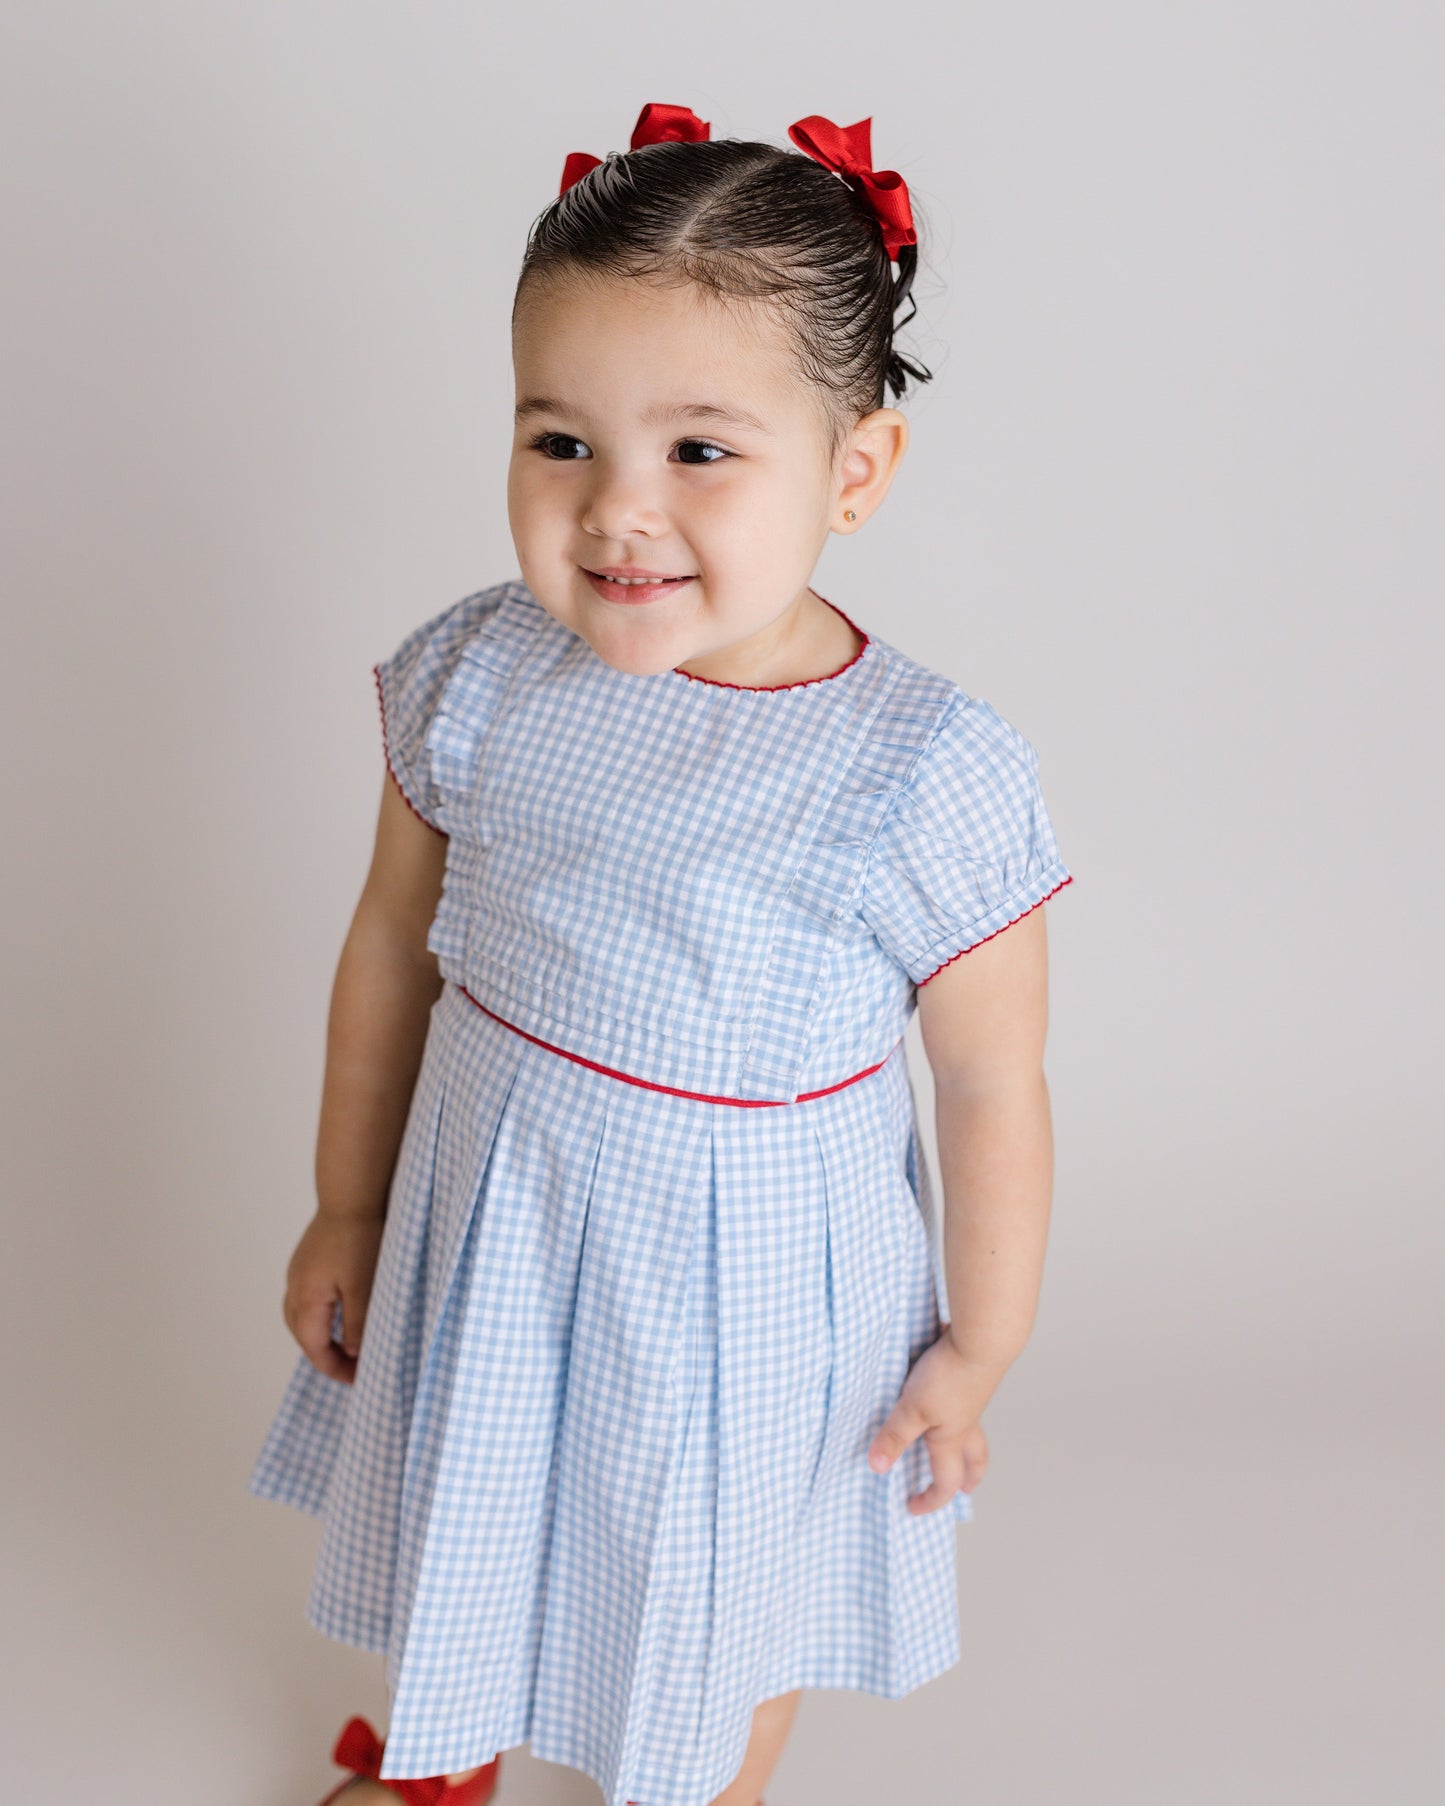 Blue Gingham Pleated Dress, Toddler Girls